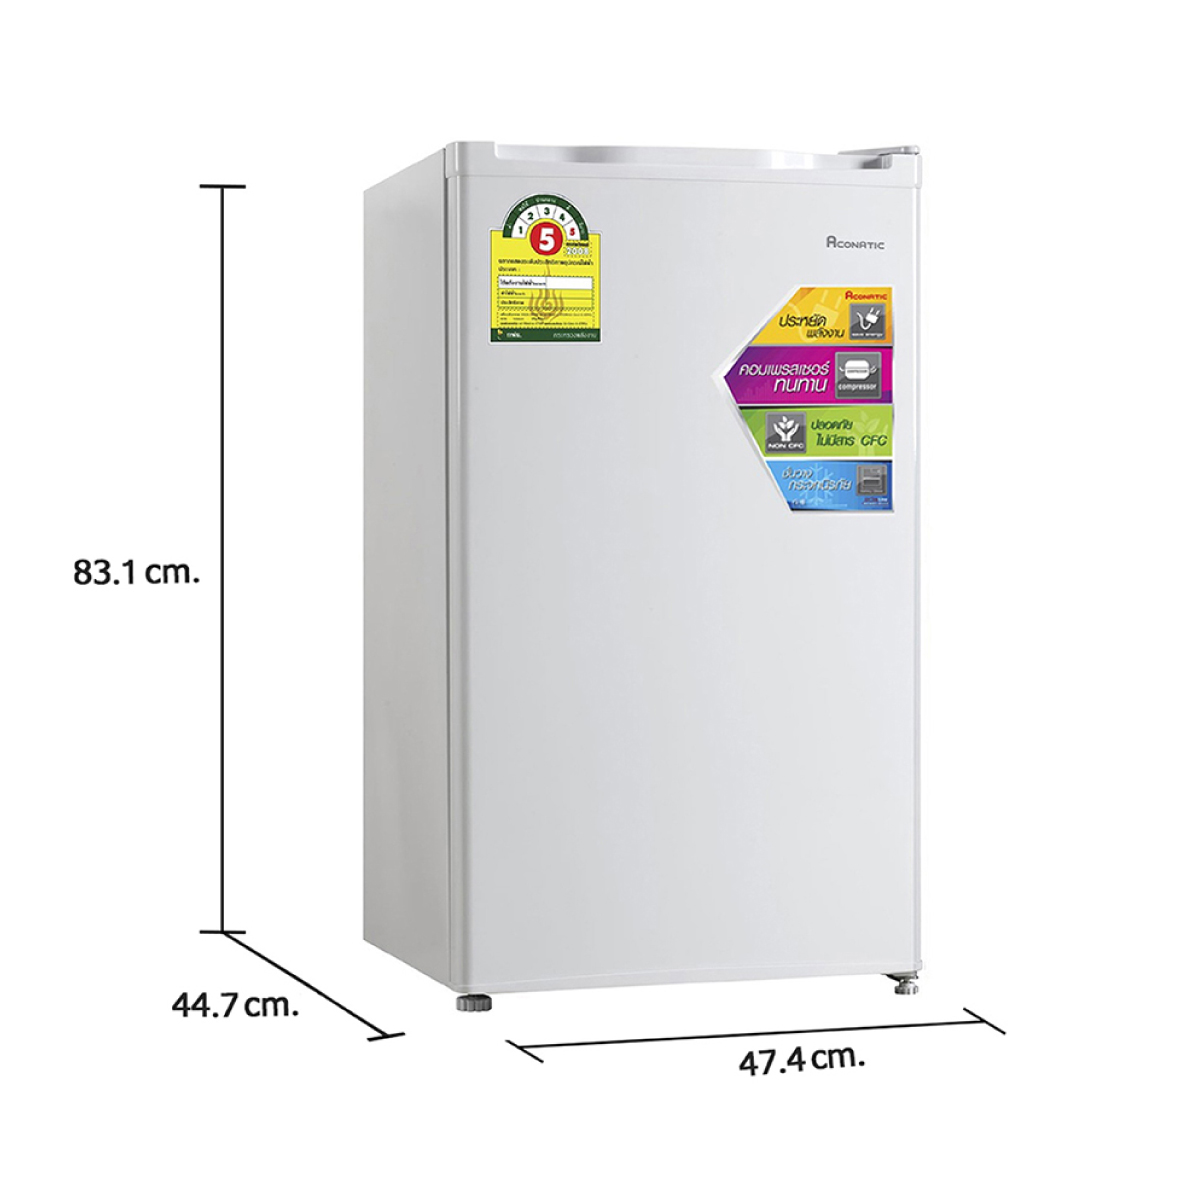 ACONATIC ตู้เย็นมินิบาร์ รุ่น AN-FR928 ความจุ 3.3 คิว สี Dark Gray รับประกัน 1 ปี